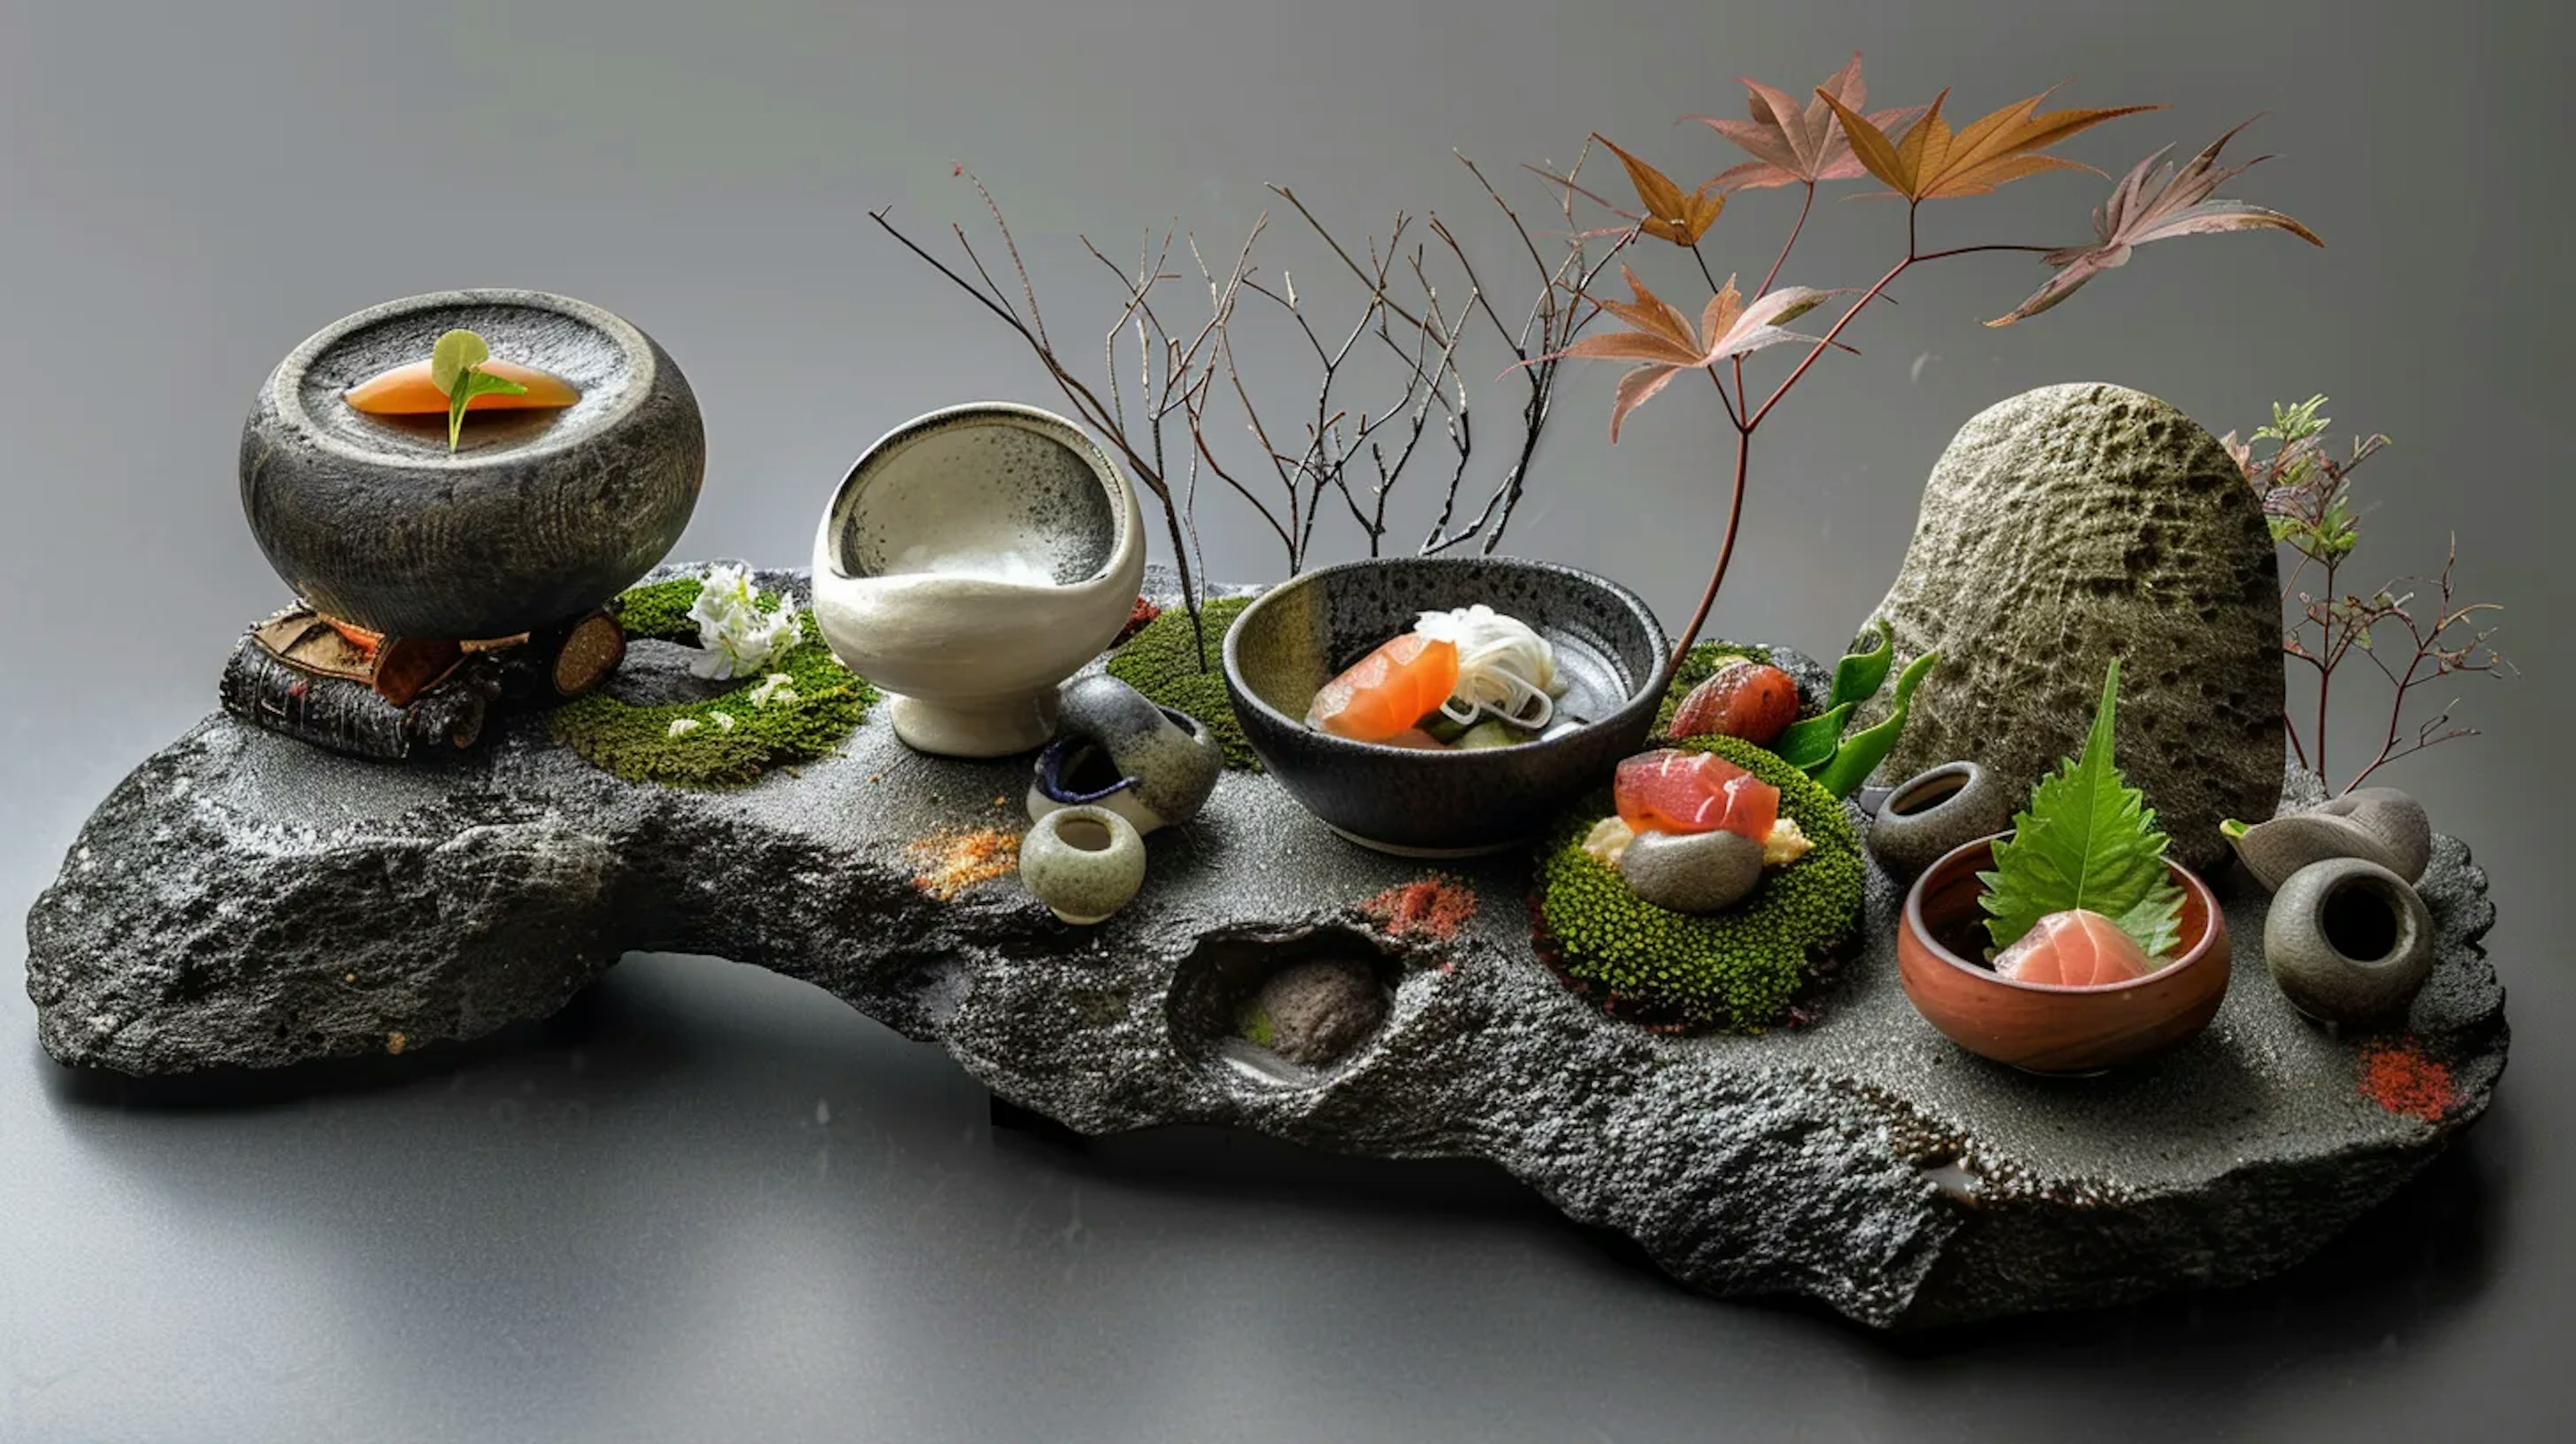 Seasonal kaiseki dishes artistically presented on traditional Japanese ceramics